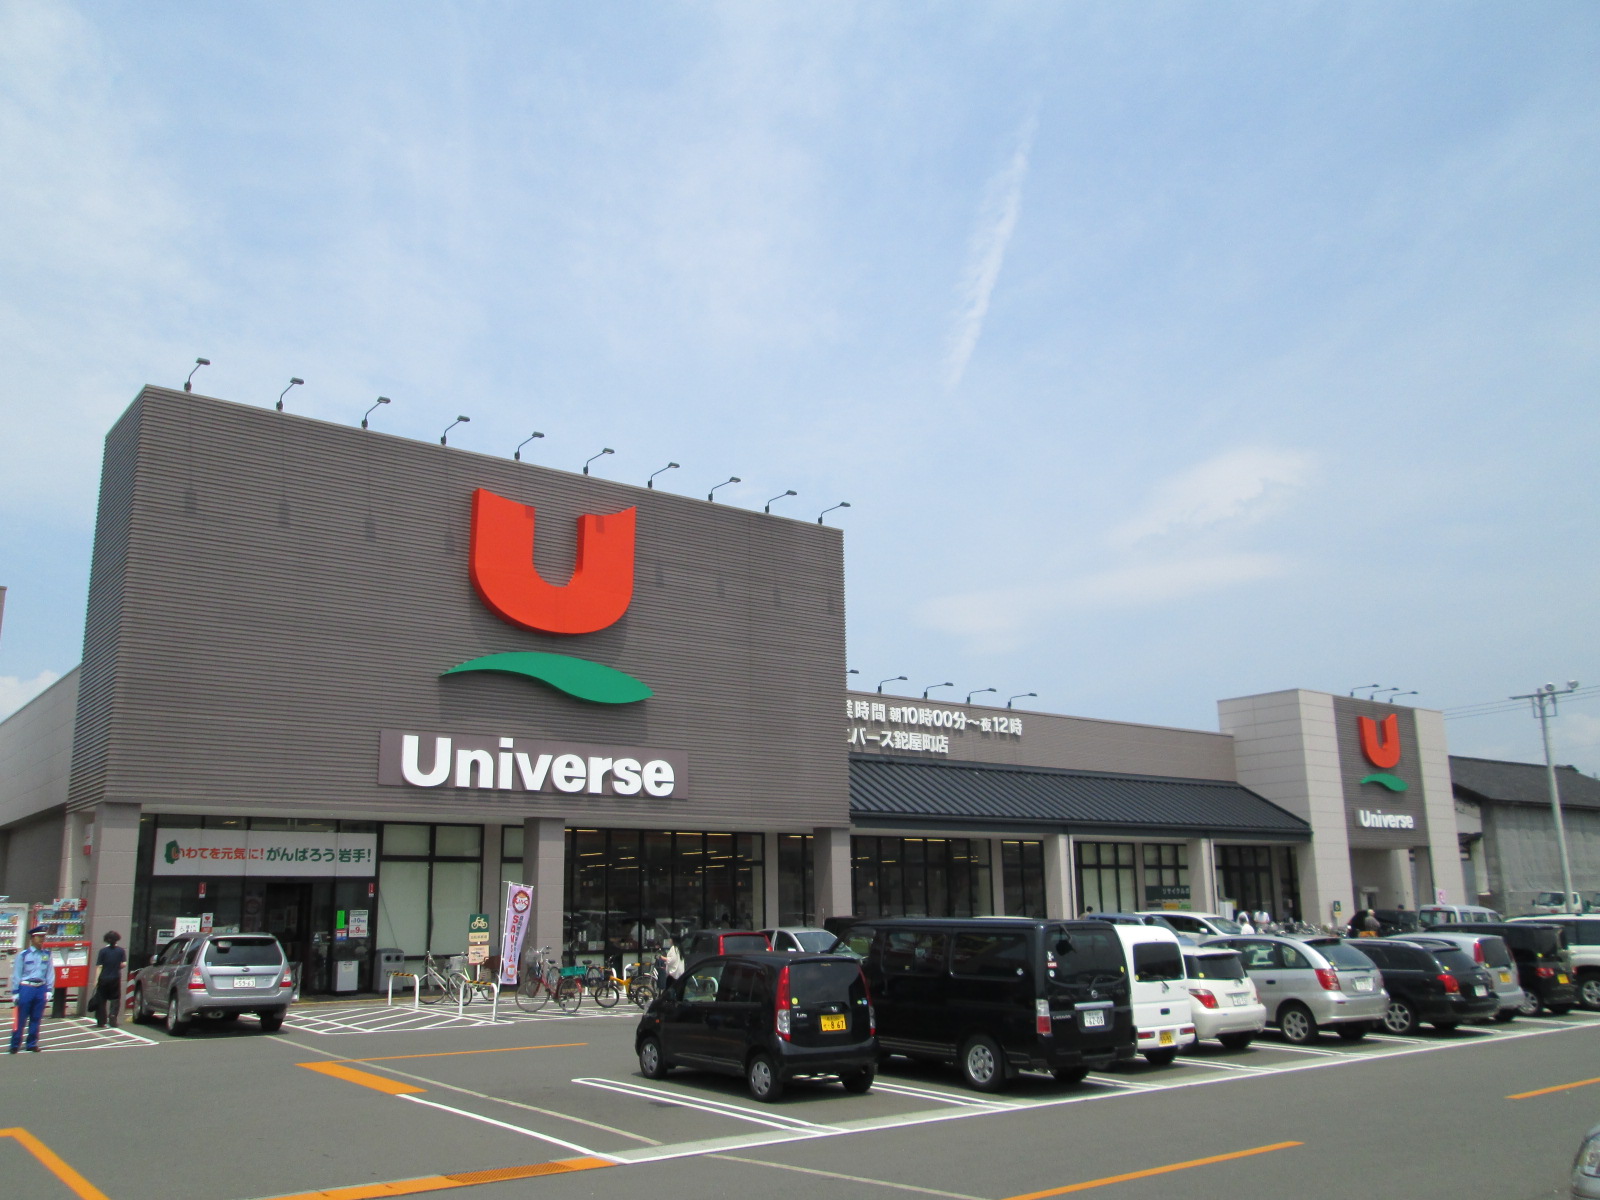 Supermarket. 596m until the universe Nataya cho shop (super)